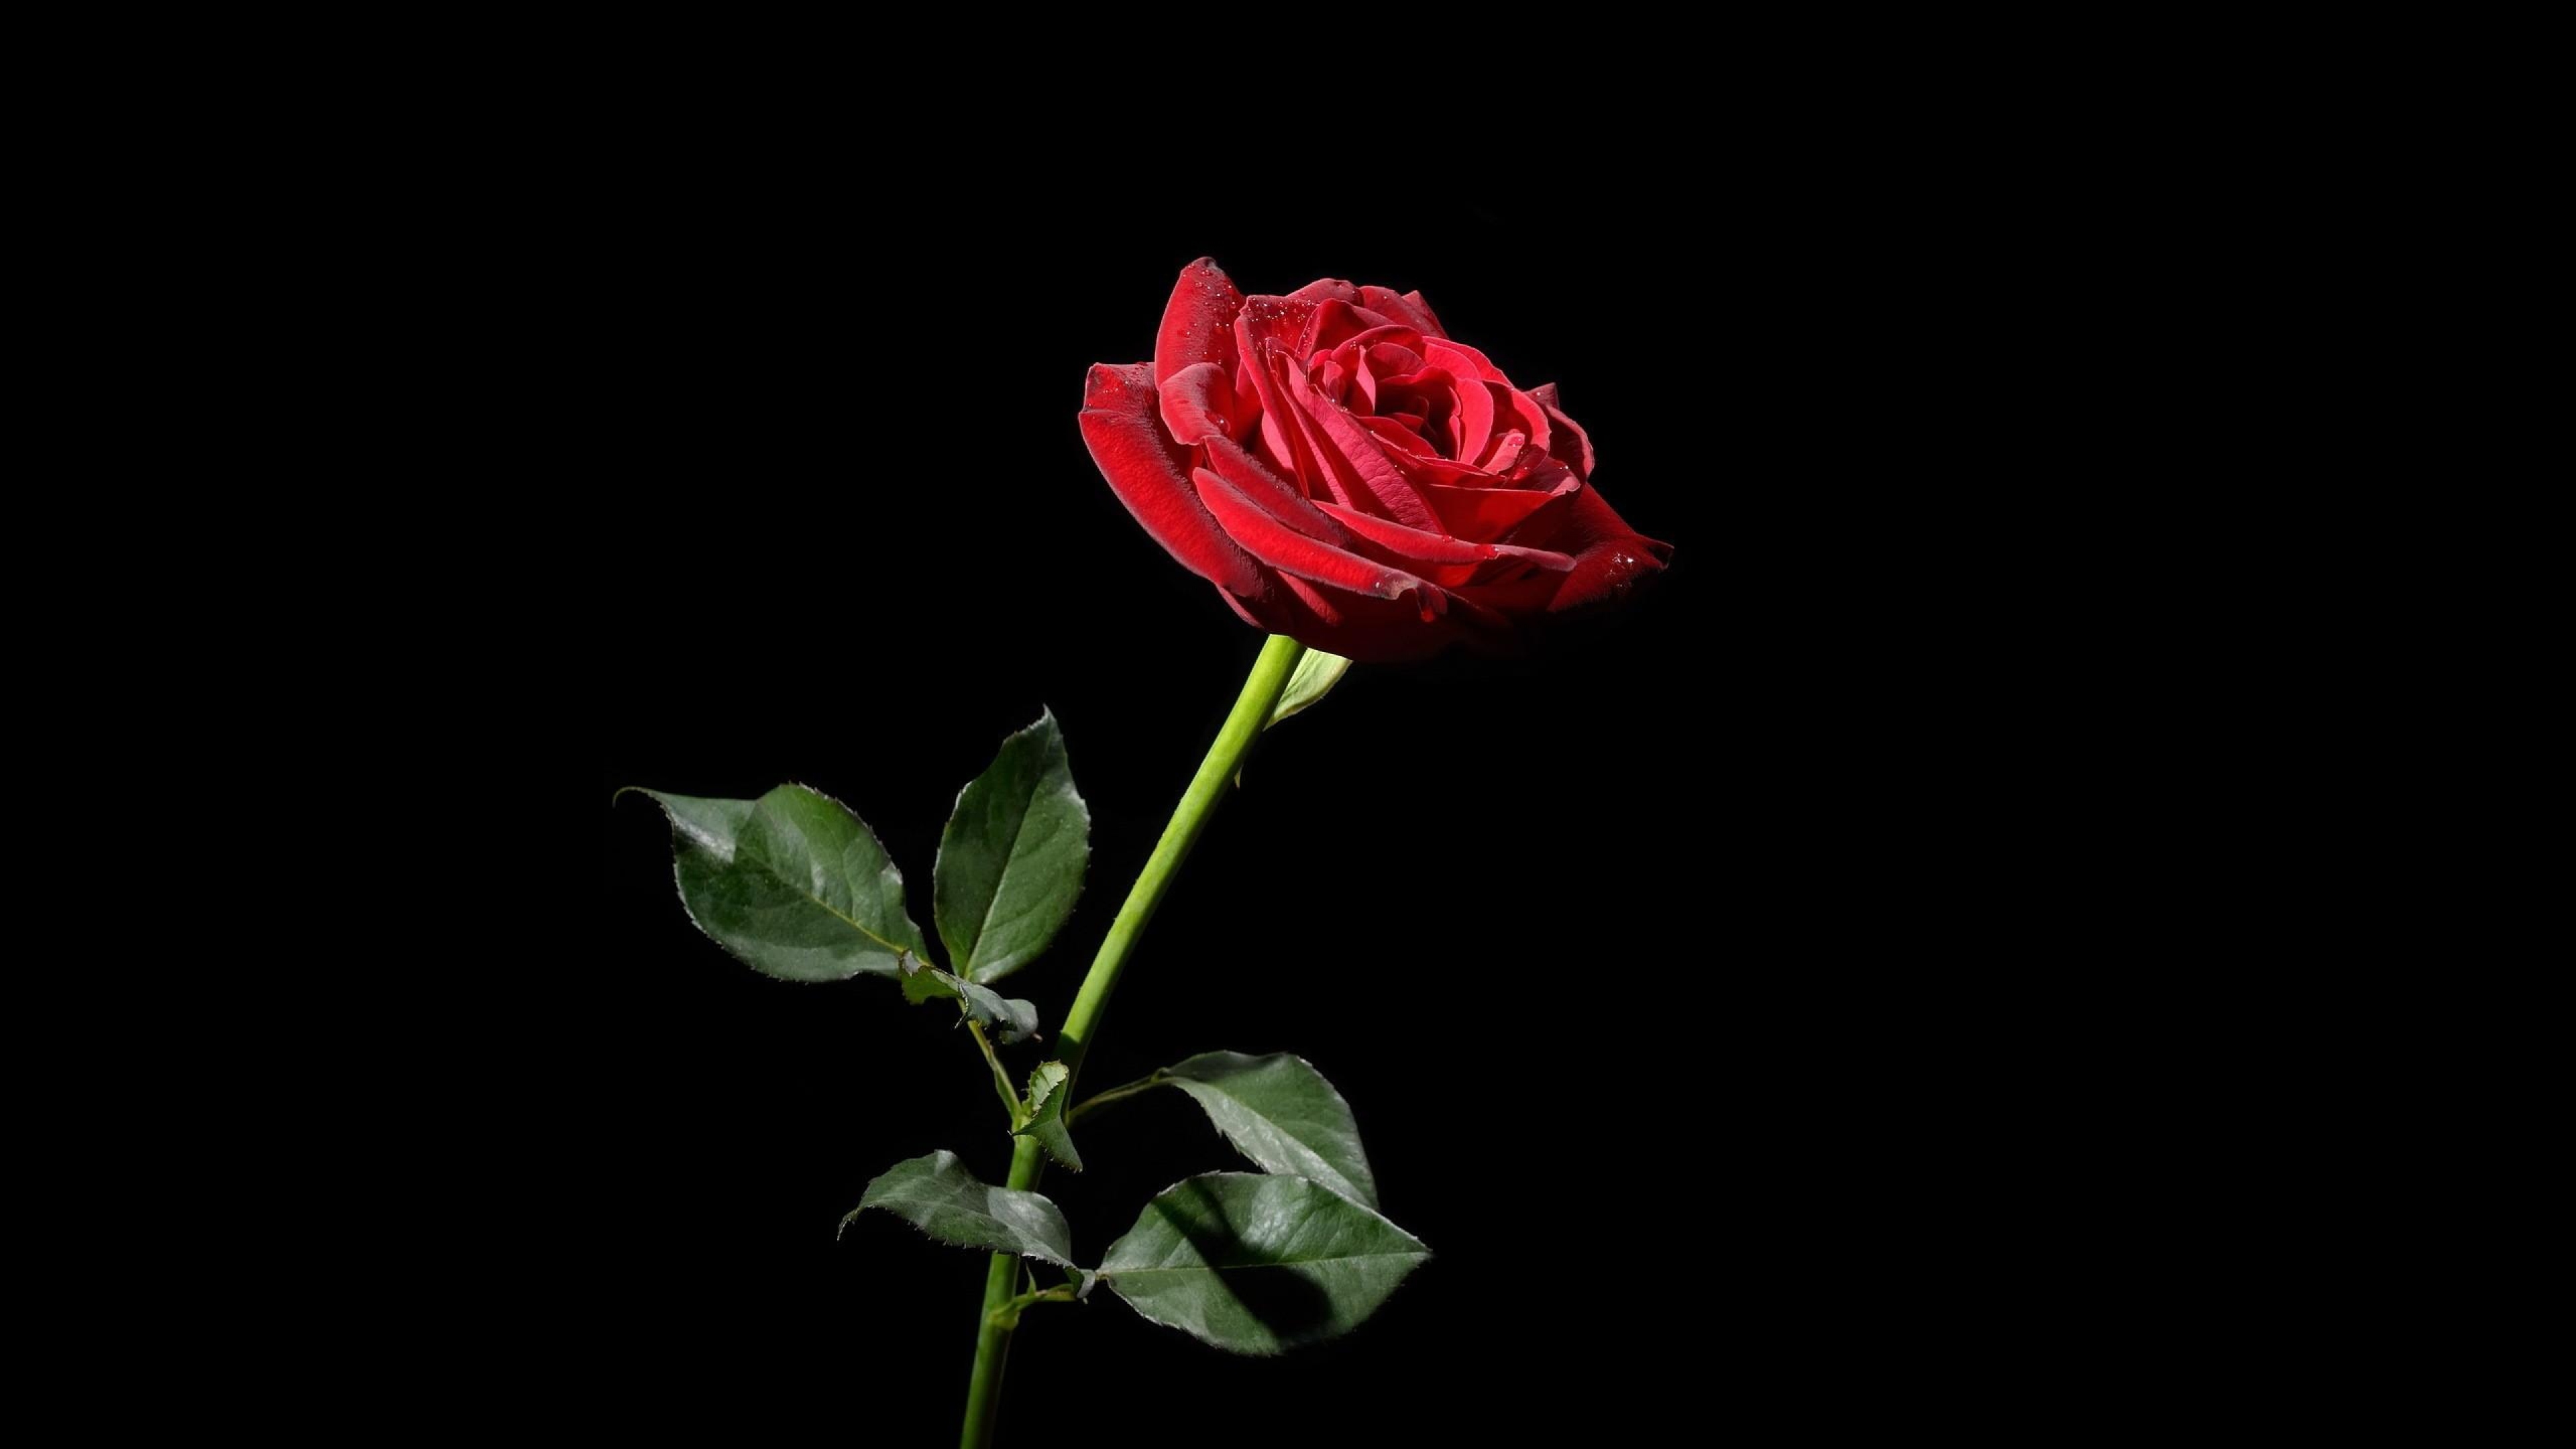 Free download Rose Red Flower Black background Wallpaper Background 4K Ultra HD [3840x2160] for